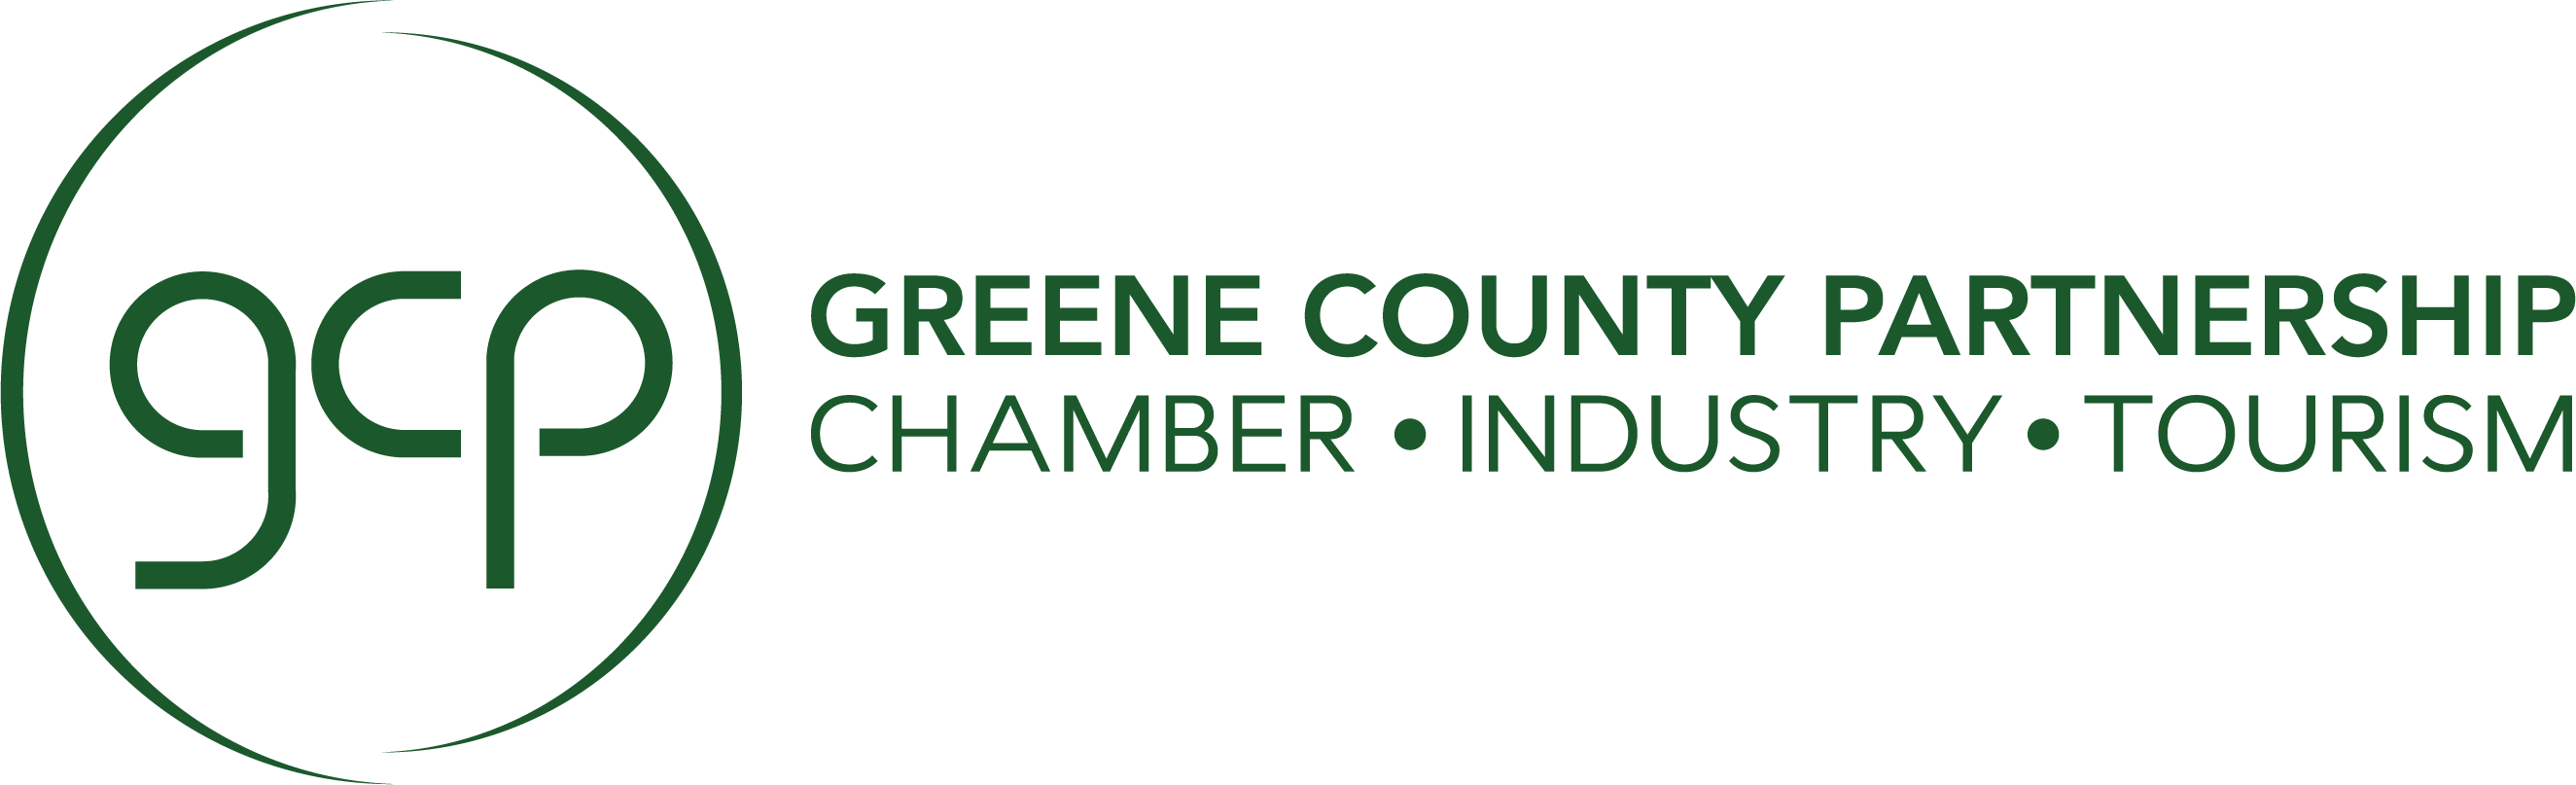 Greene County Partnerhip logo